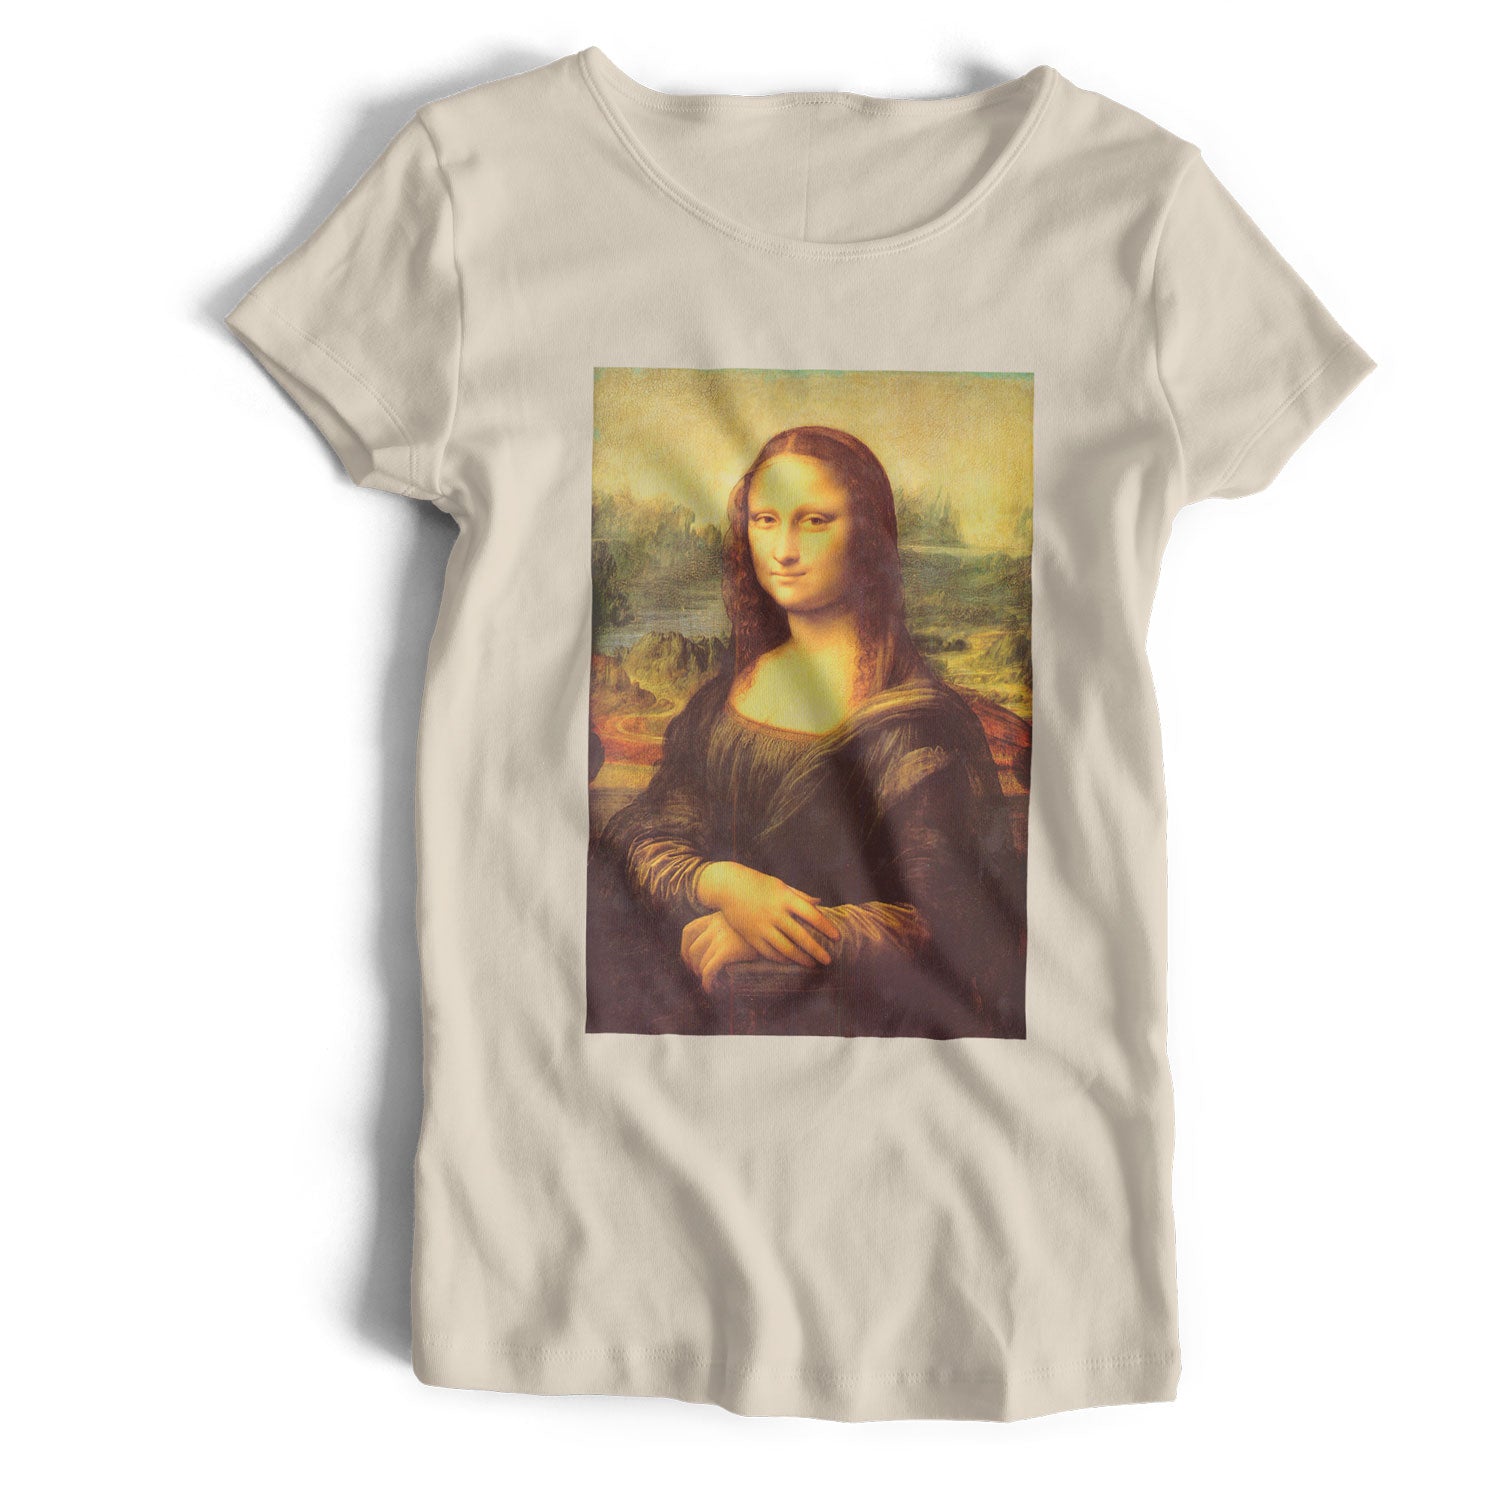 Leonardo da Vinci T Shirt - Mona Lisa An Old Skool Hooligans Classic Art Print